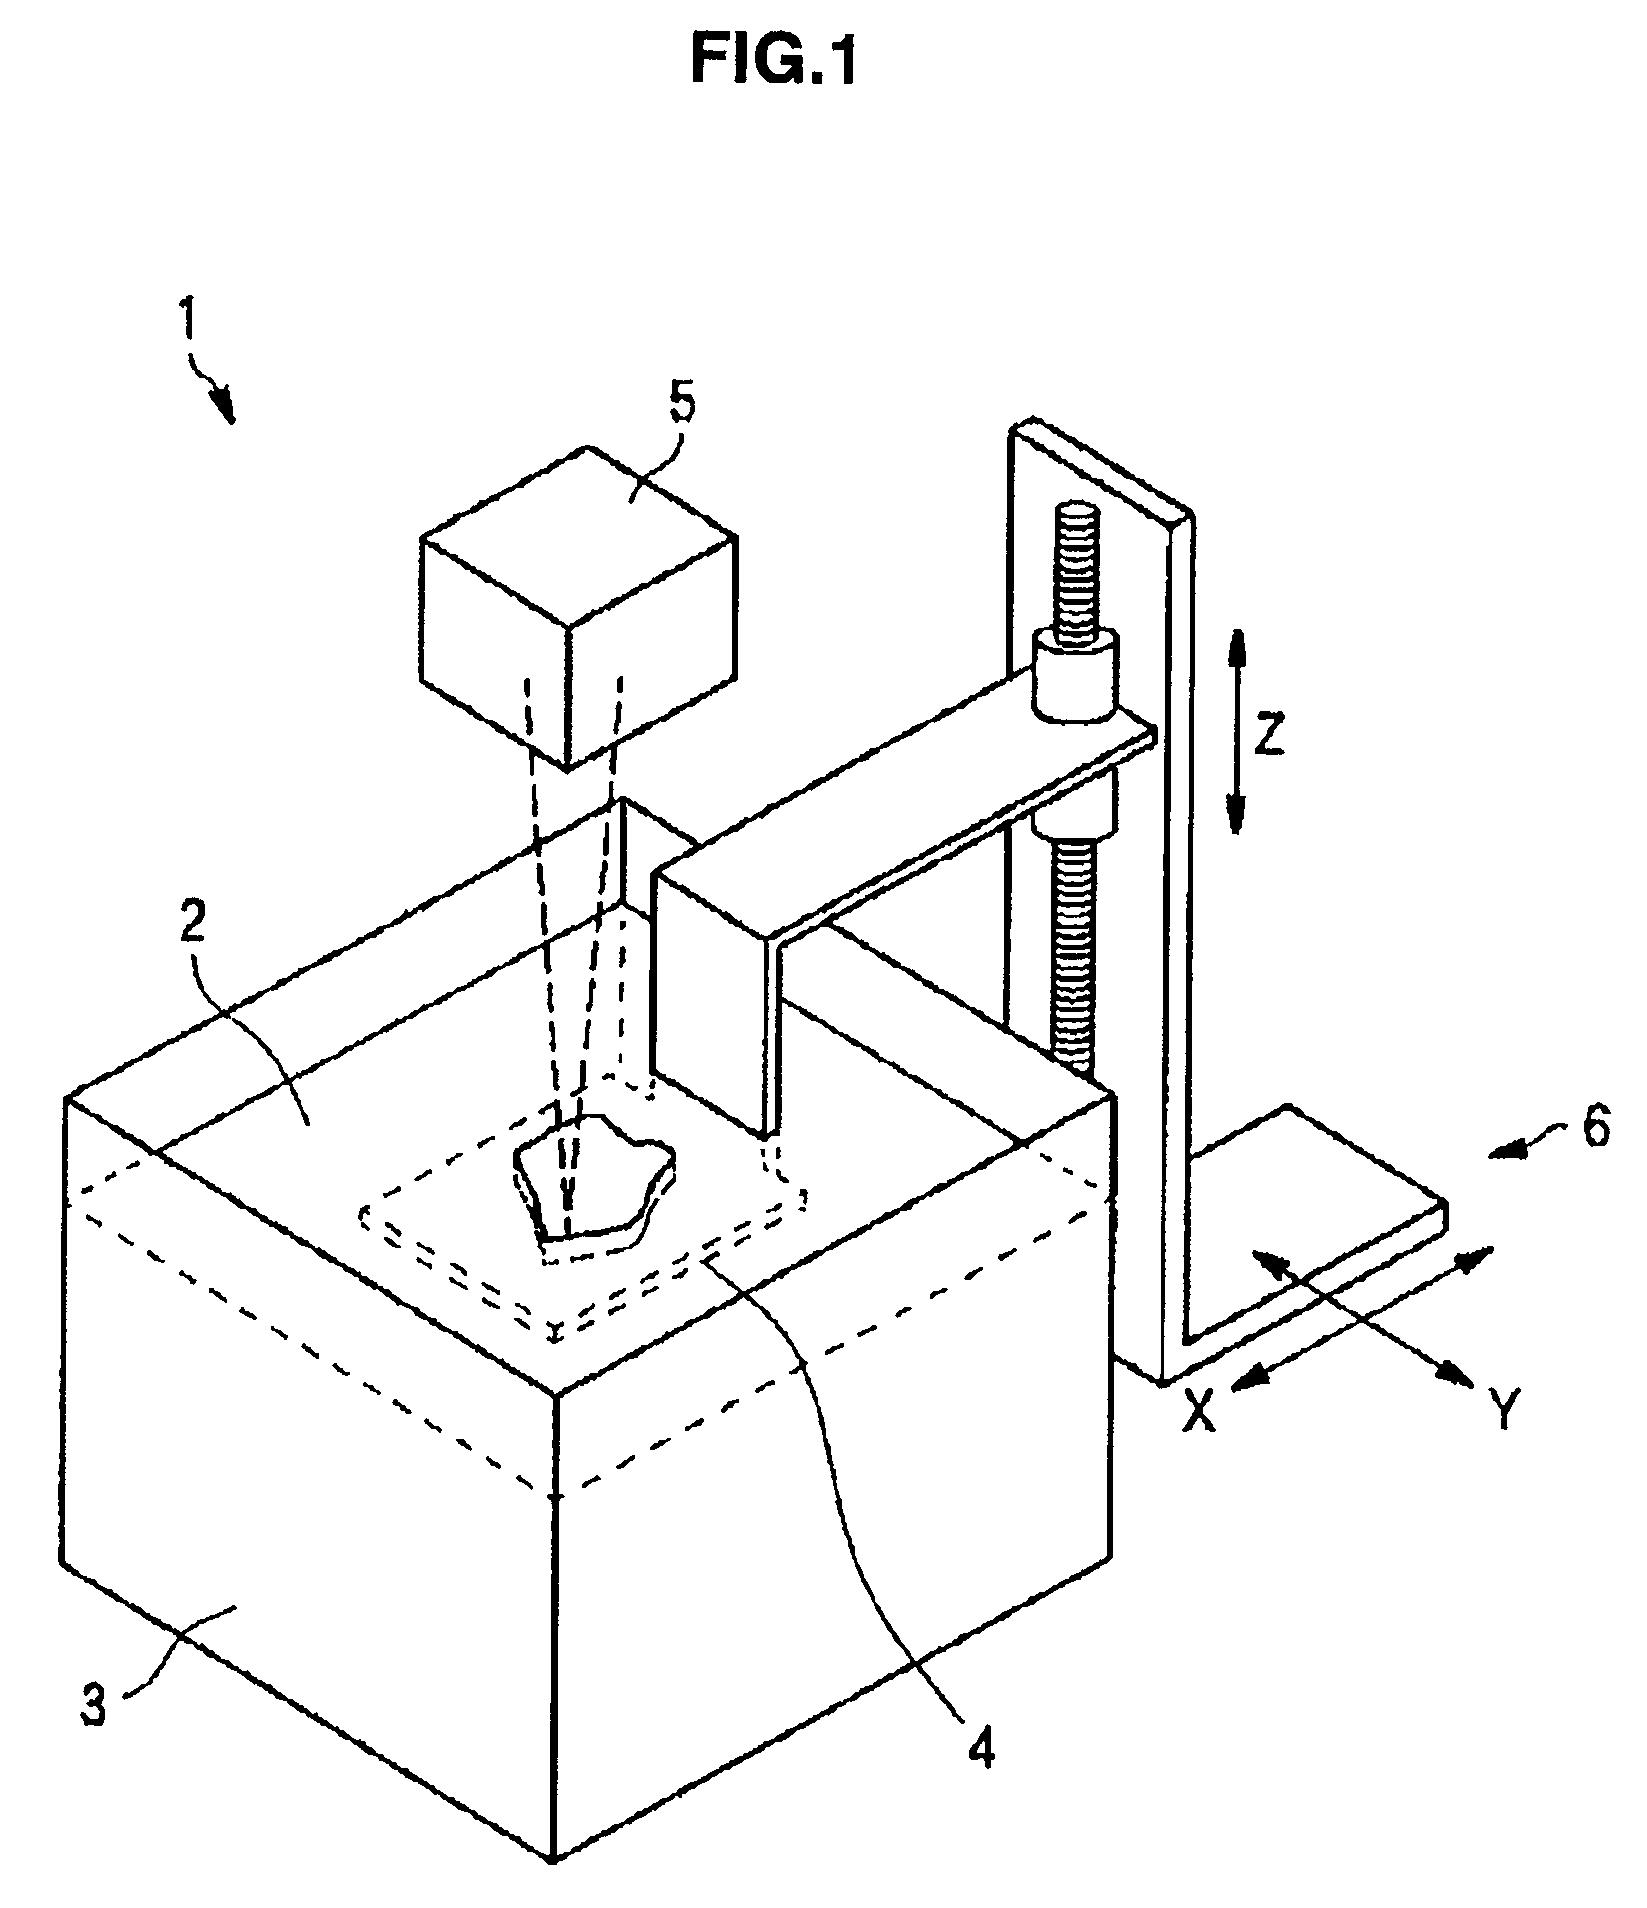 Optical modeling apparatus